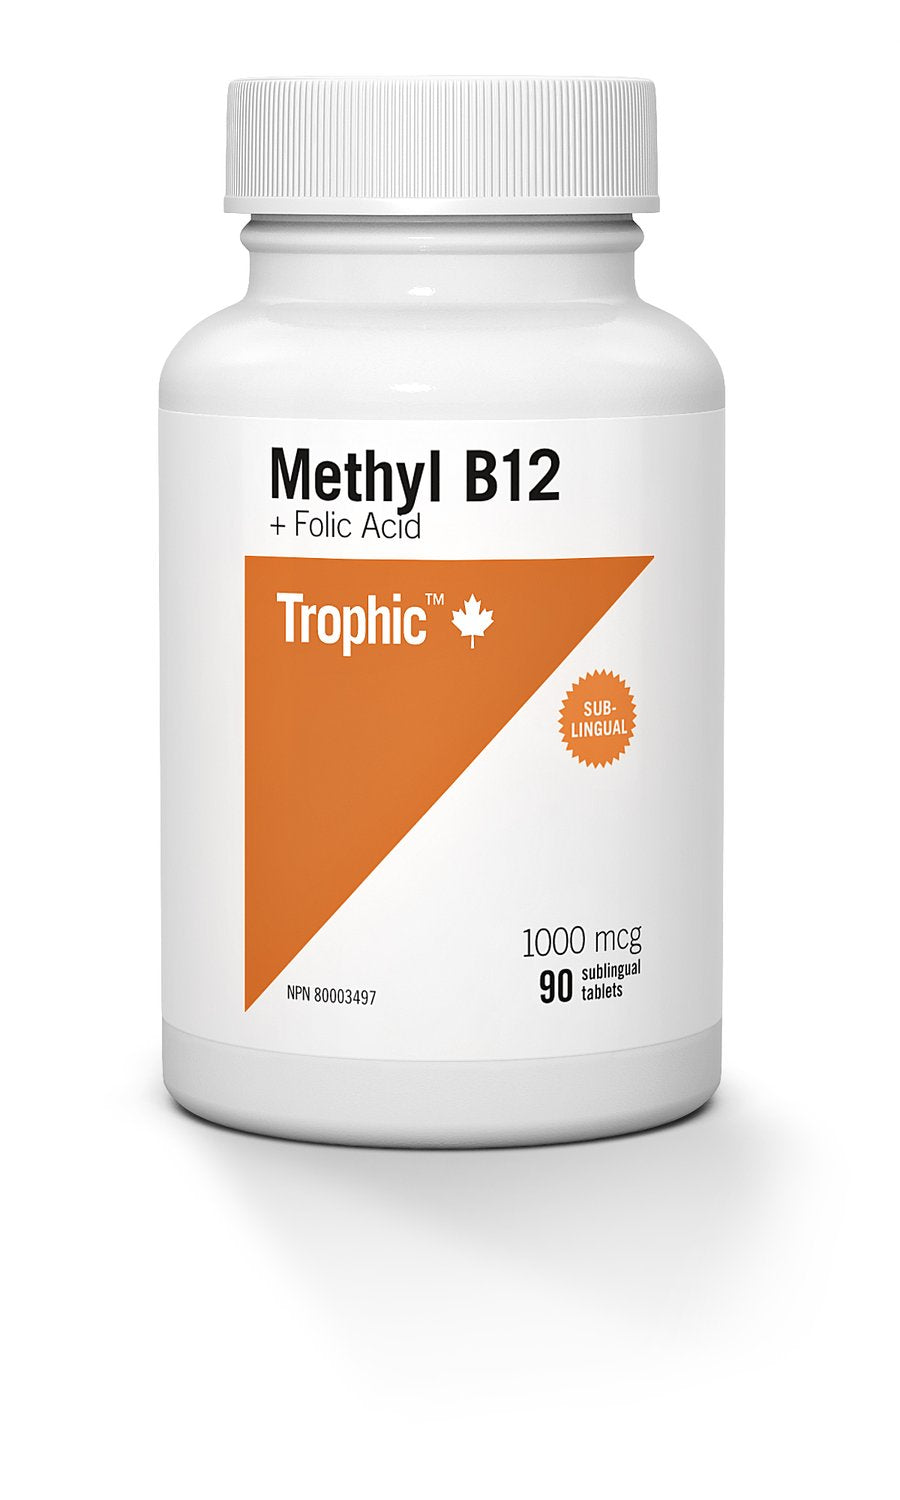 Trophic - Methyl B12 + Folic Acid